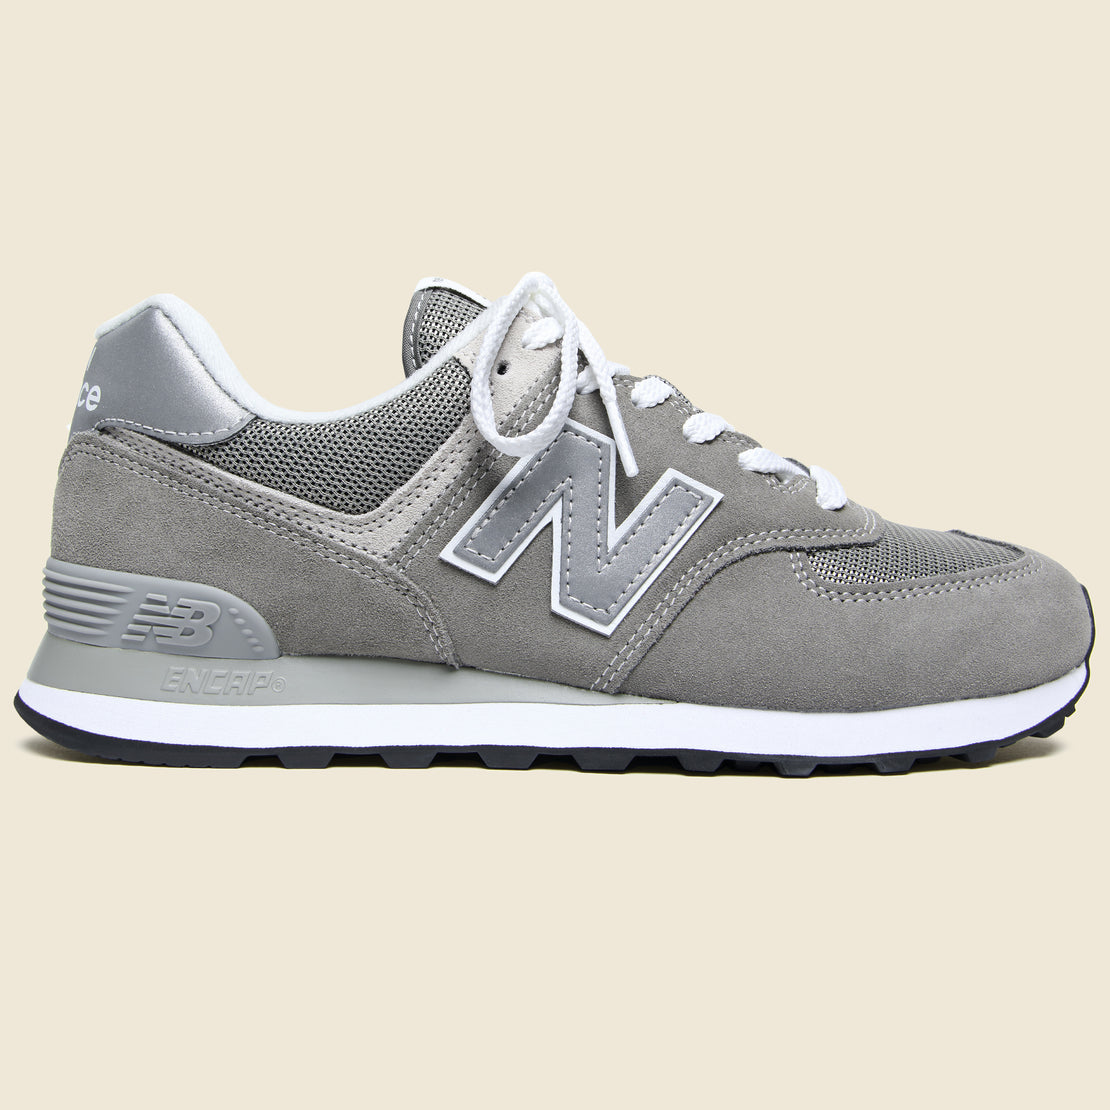 New Balance 574 Sneaker - Grey